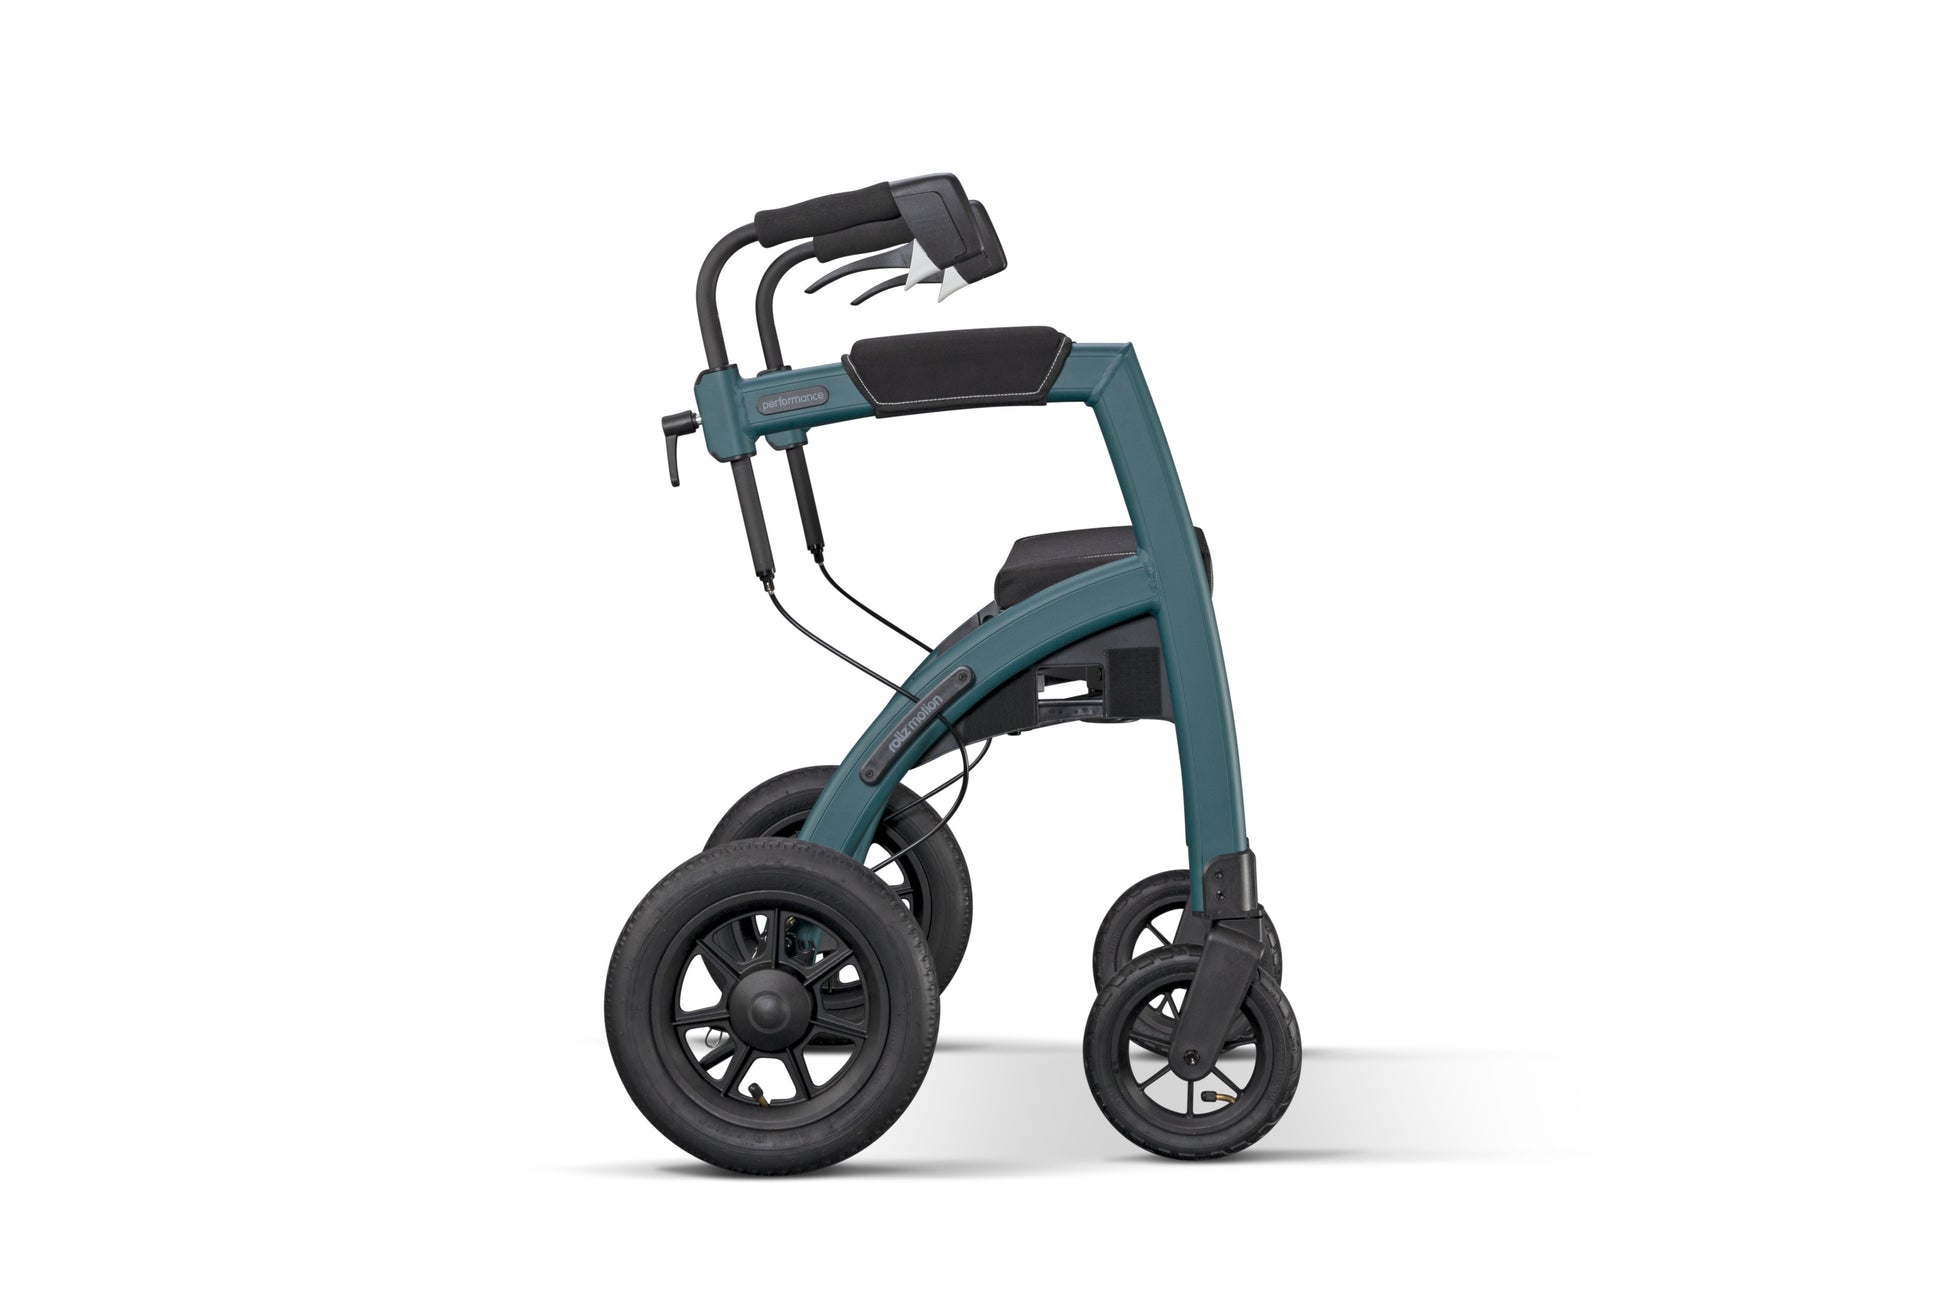 ROLLZ MOTION PERFORMANCE | Convertible Walker to Wheelchair | Mobility | Radius Shop | NZ